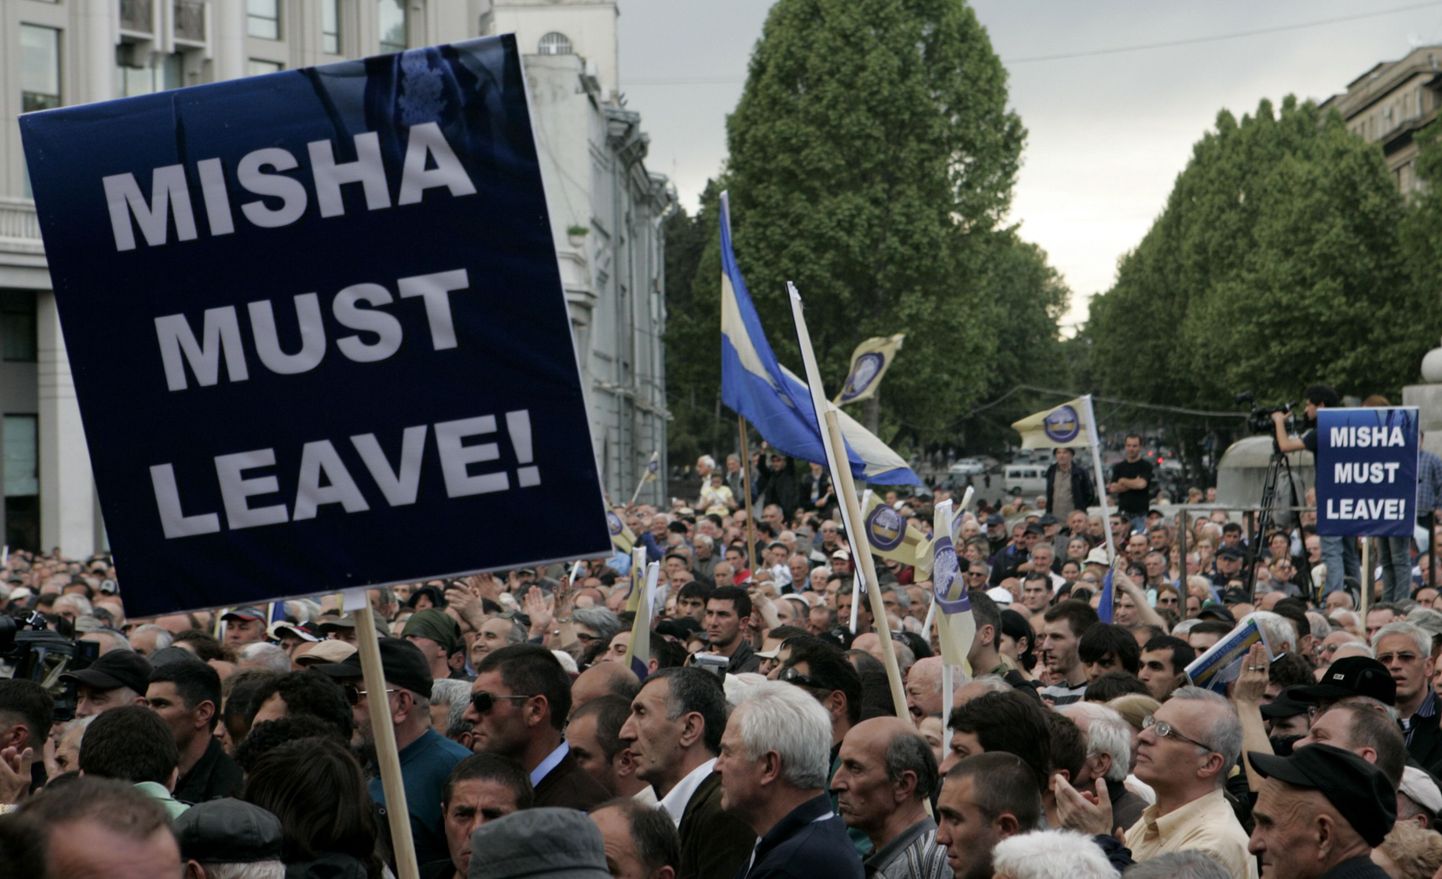 Митинг в Тбилиси 21 мая. Участники требуют отставки Саакашвили.